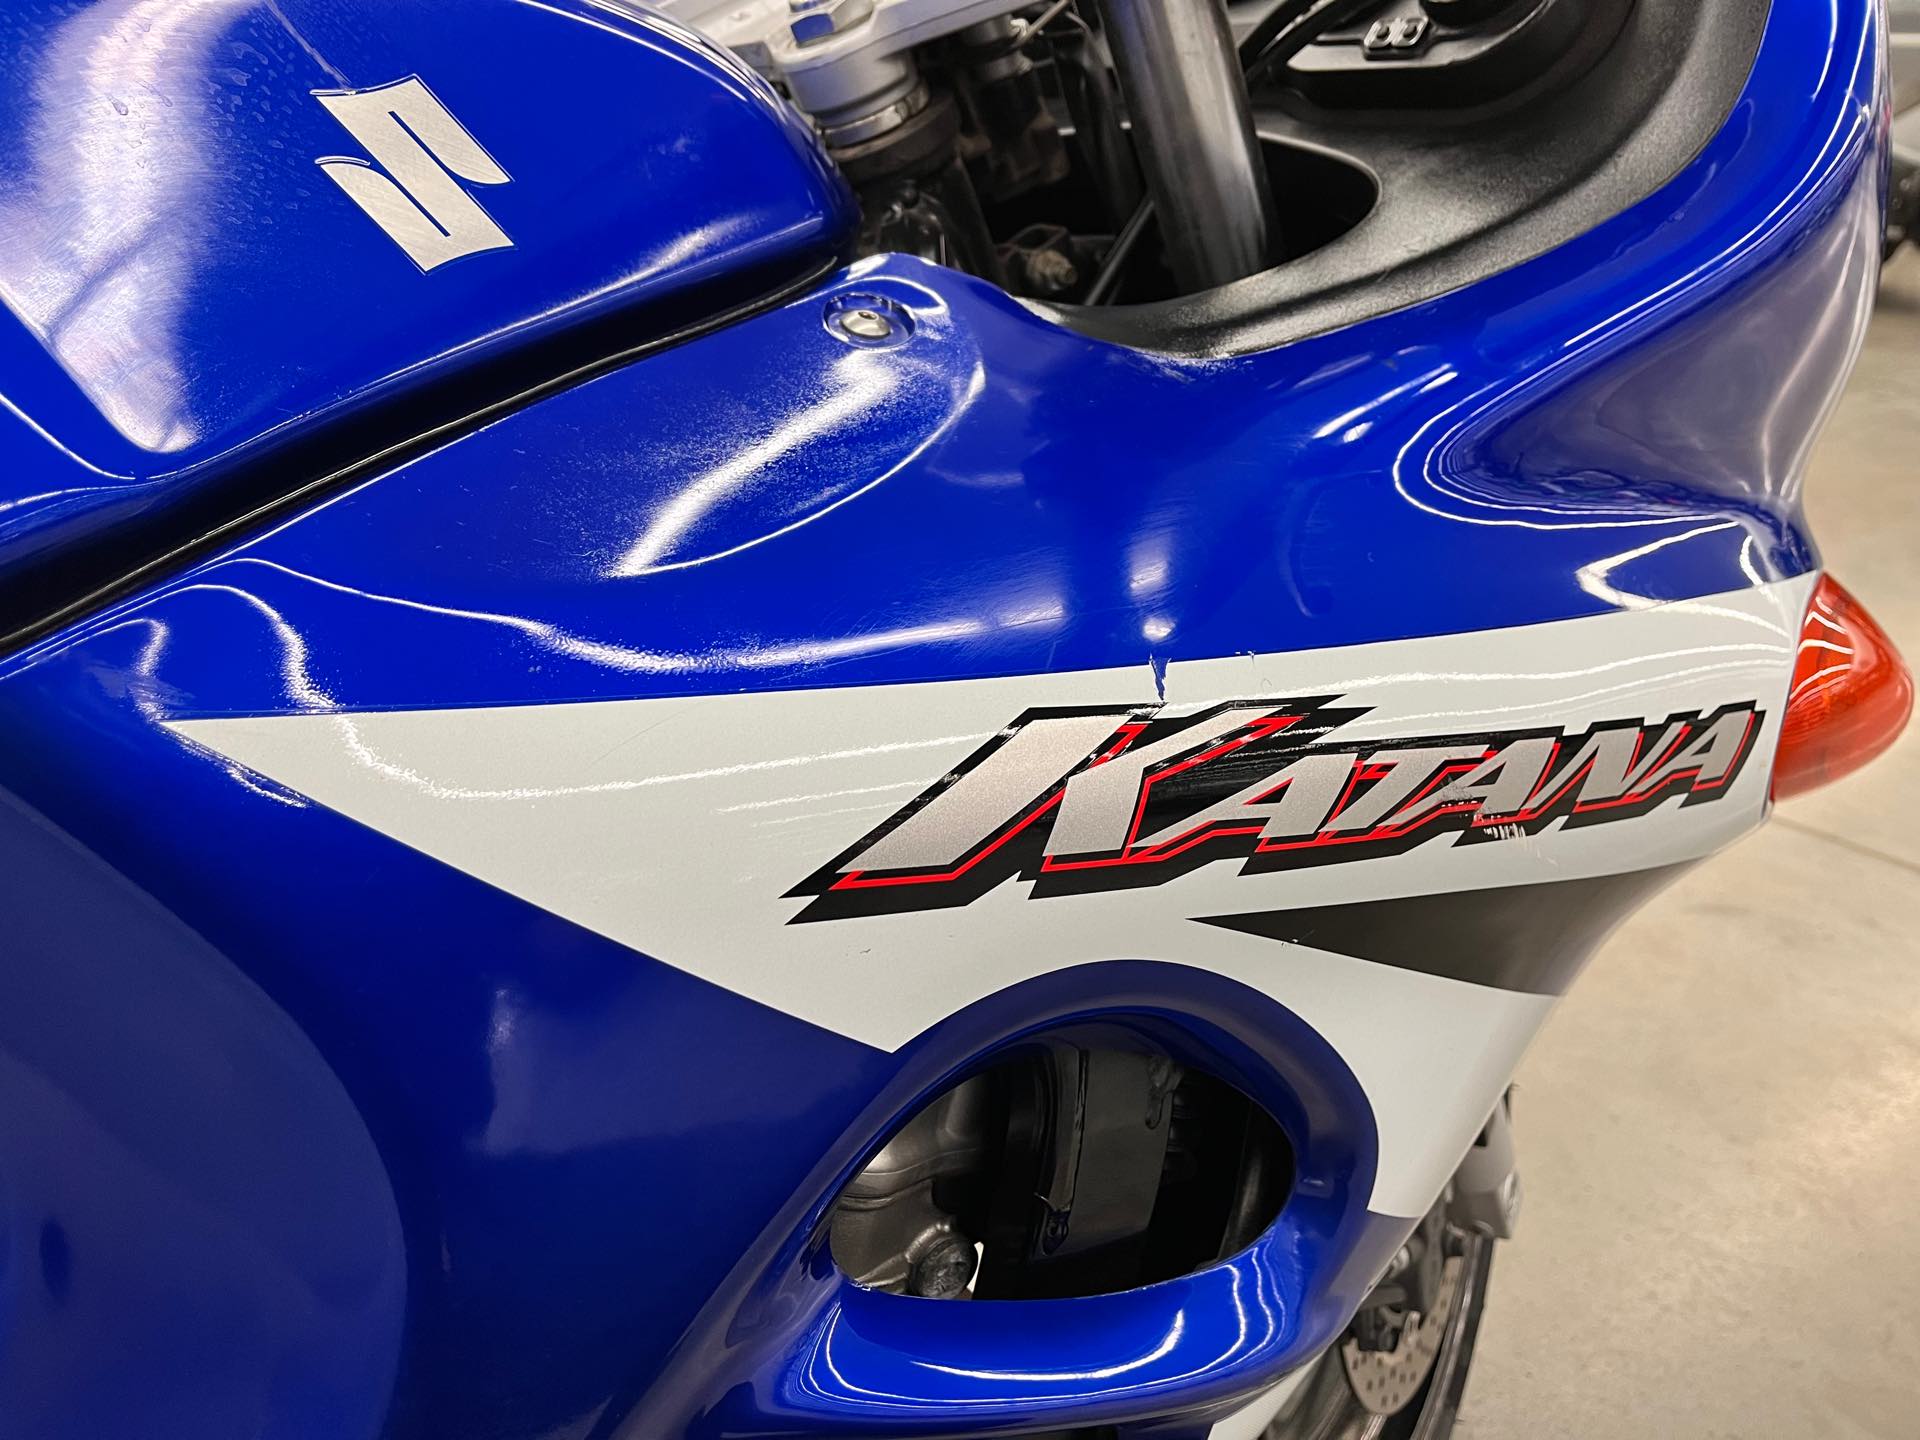 2004 Suzuki Katana 600 at Aces Motorcycles - Denver